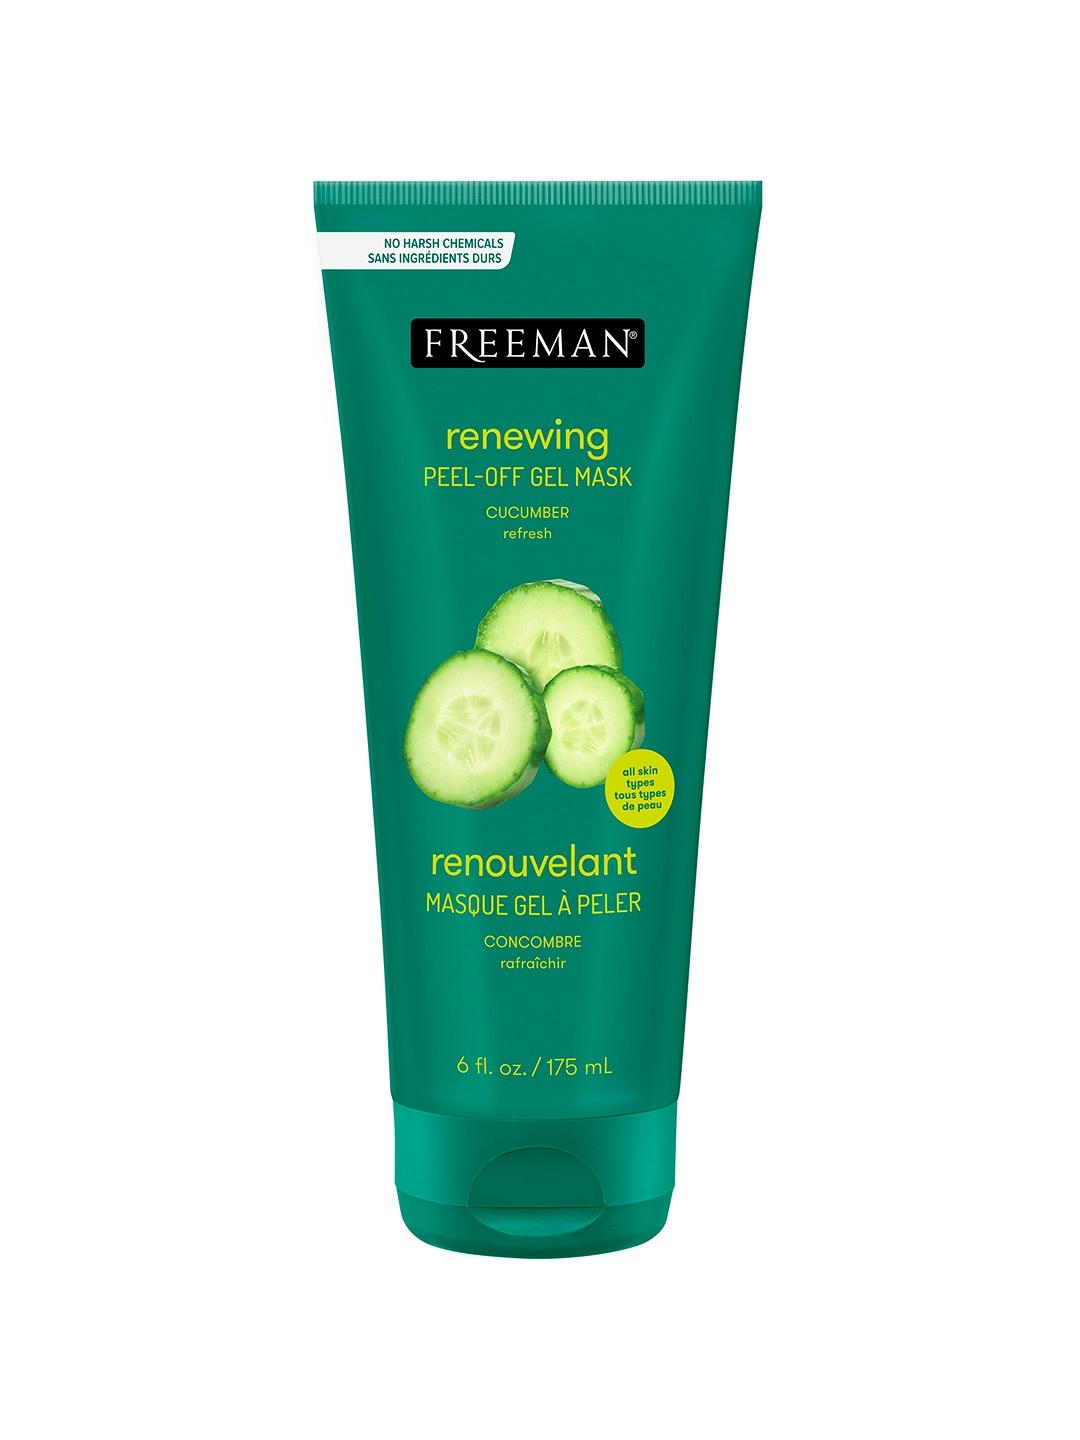 FREEMAN Renewing Peel-Off Gel Mask with Cucumber - 175 ml